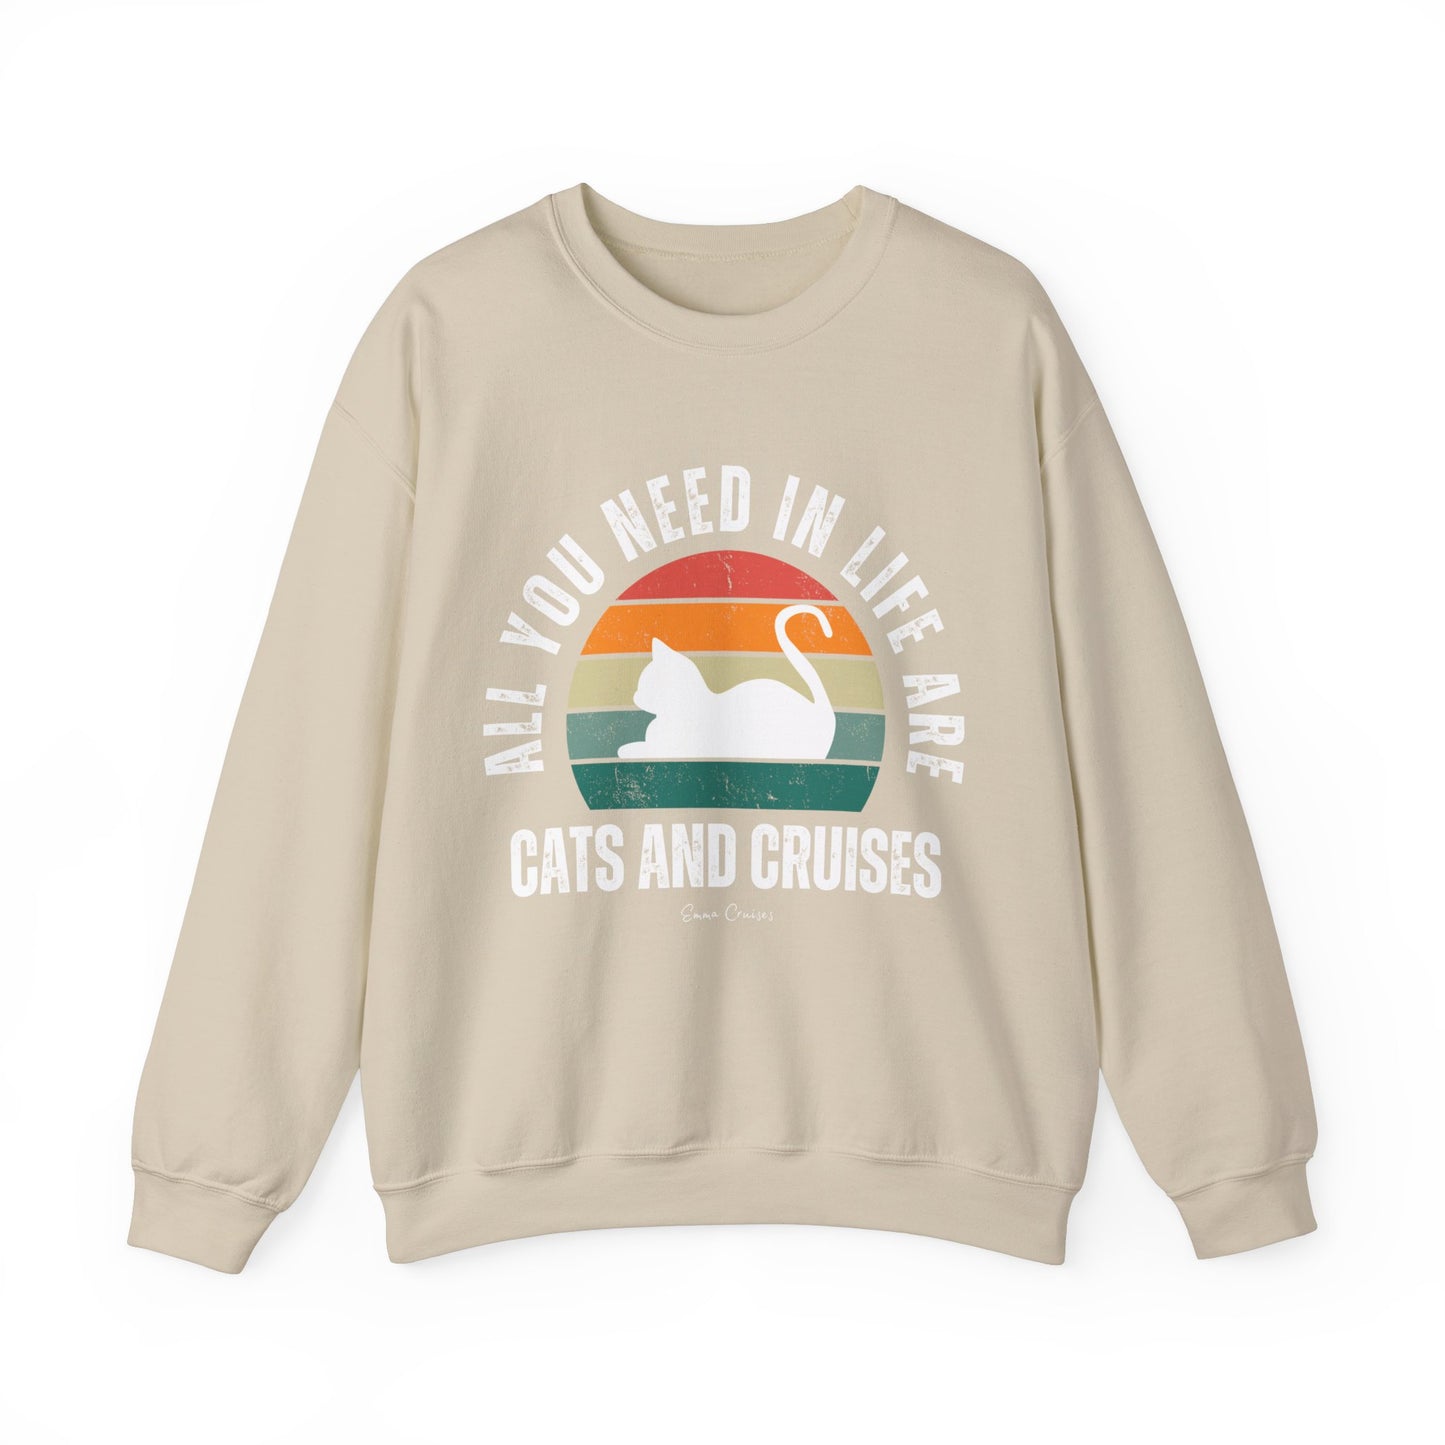 Cats and Cruises - UNISEX Crewneck Sweatshirt